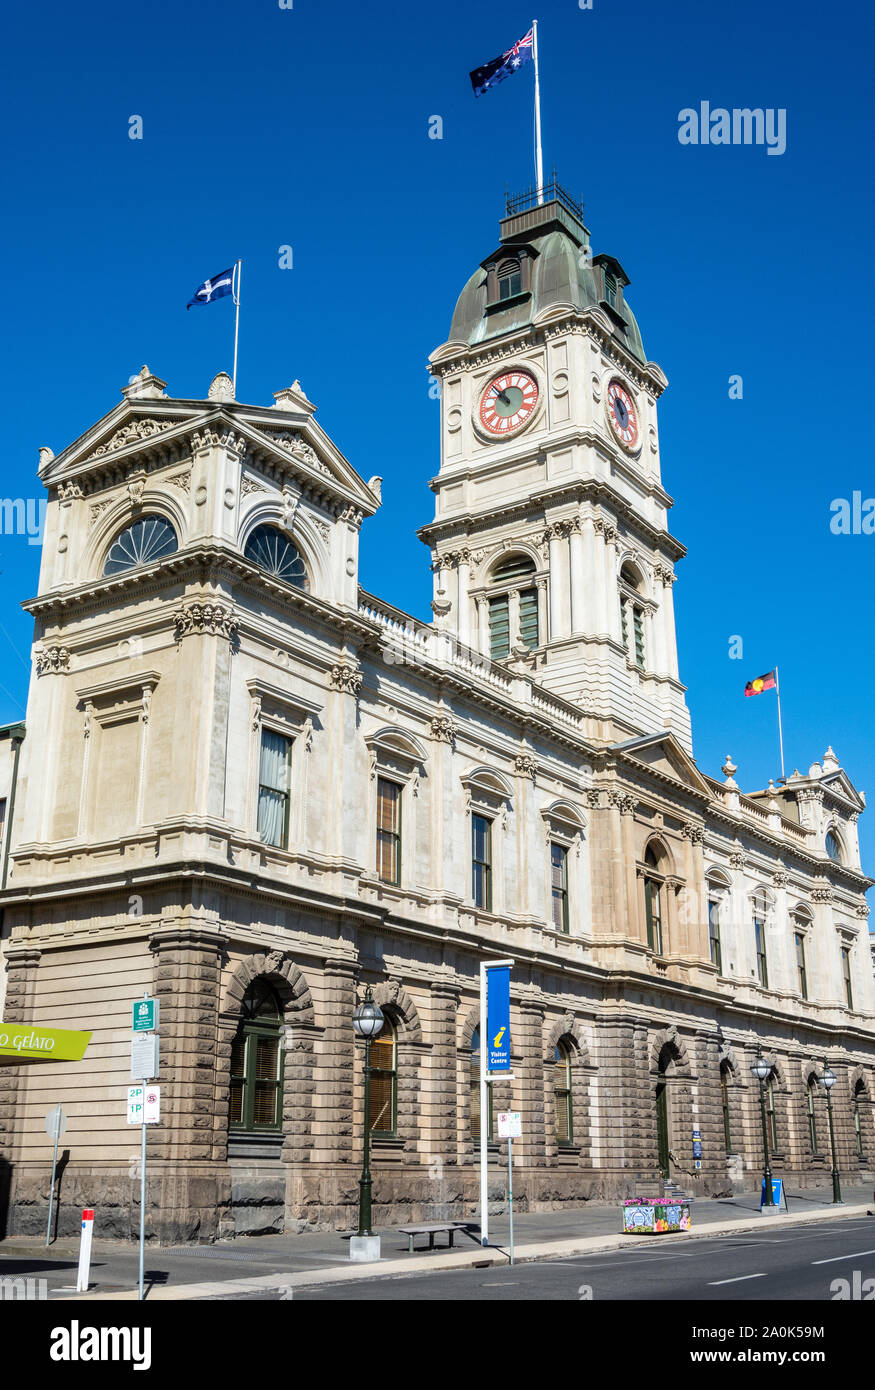 Ballarat, Victoria, Australia - March 8, 2017. Exterior view of the Town Hall building in Ballarat, VIC. Stock Photo